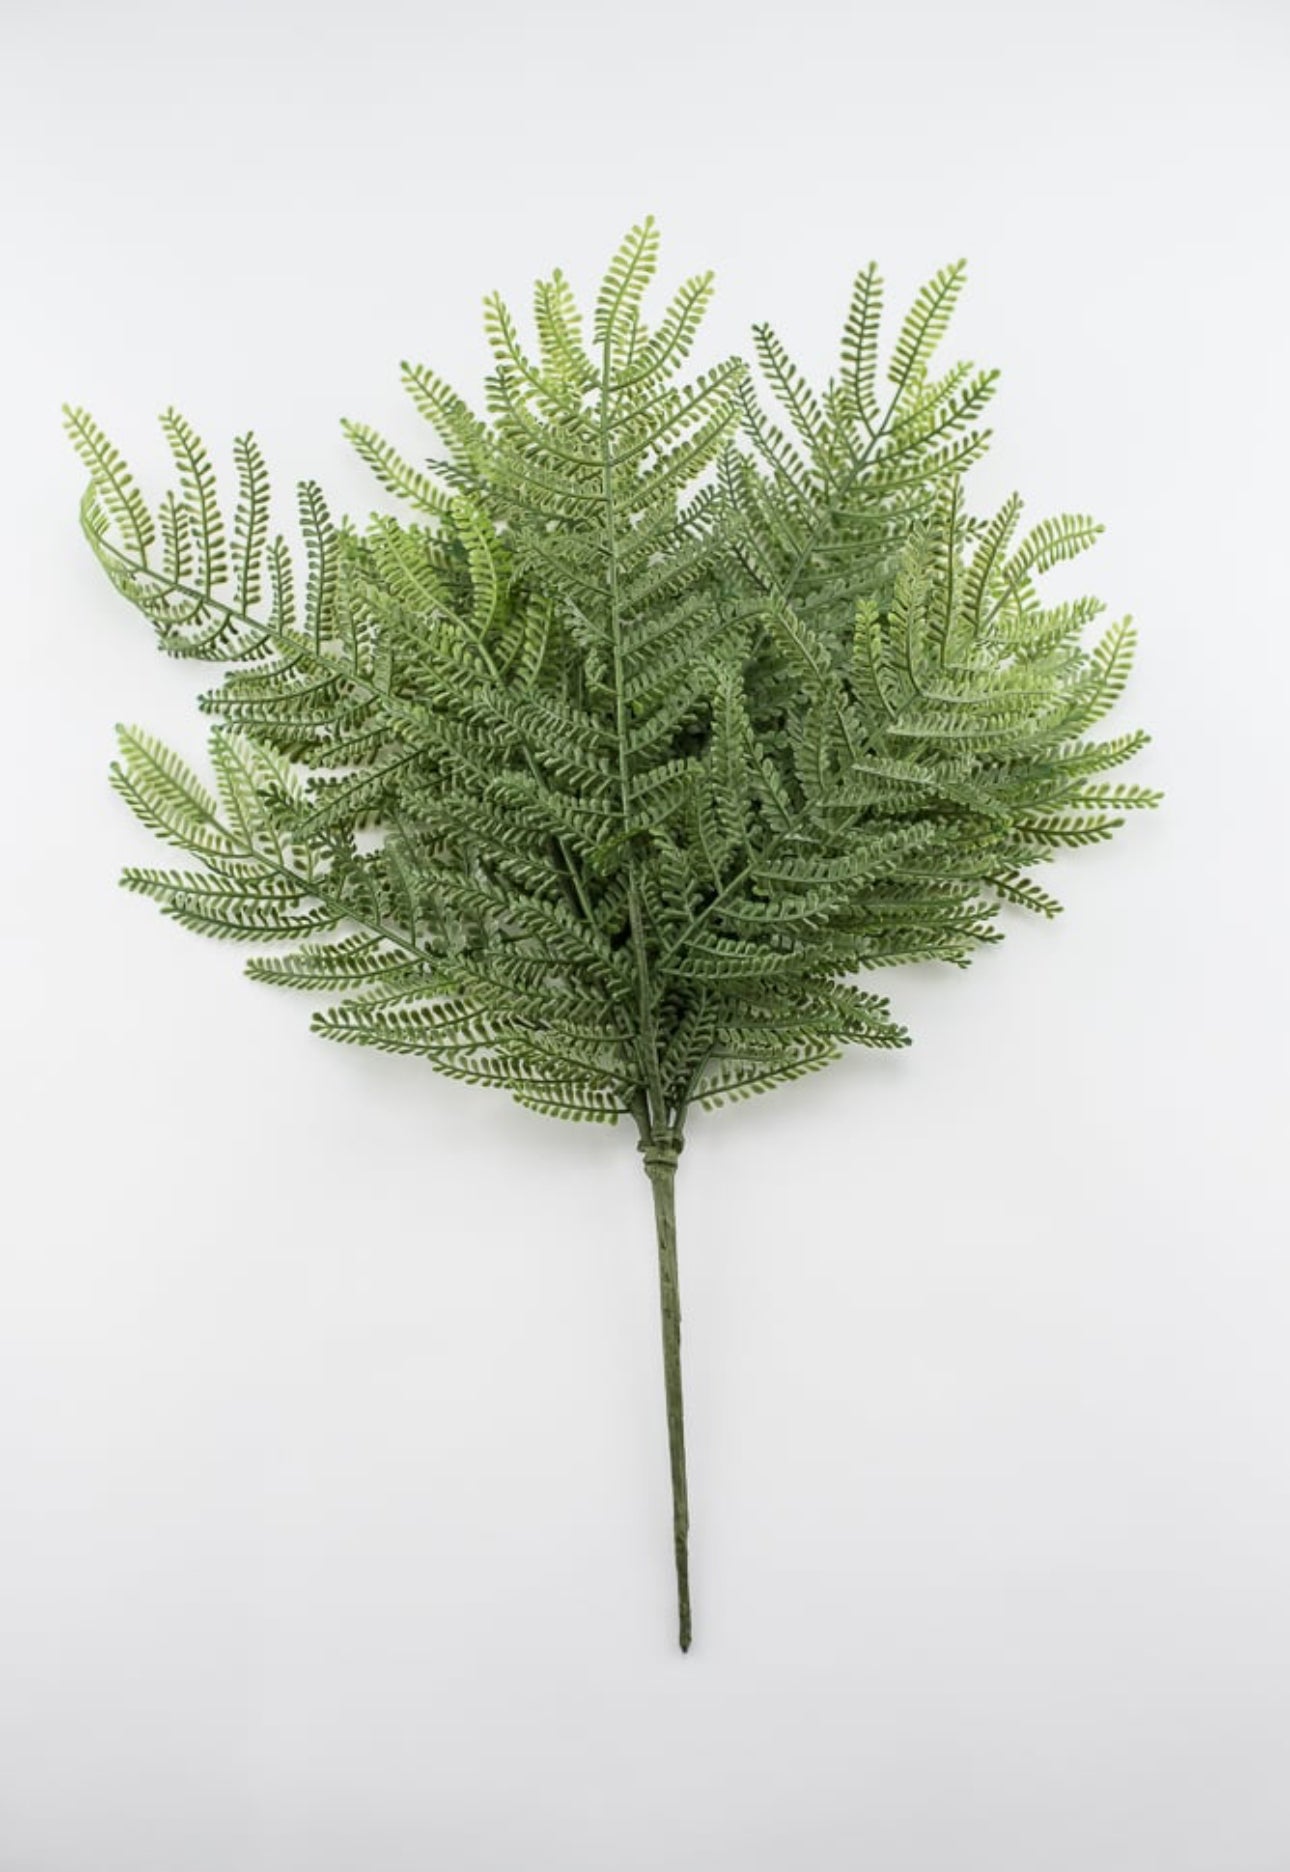 Artificial thelypteridaceae fern bush - Greenery Market27505